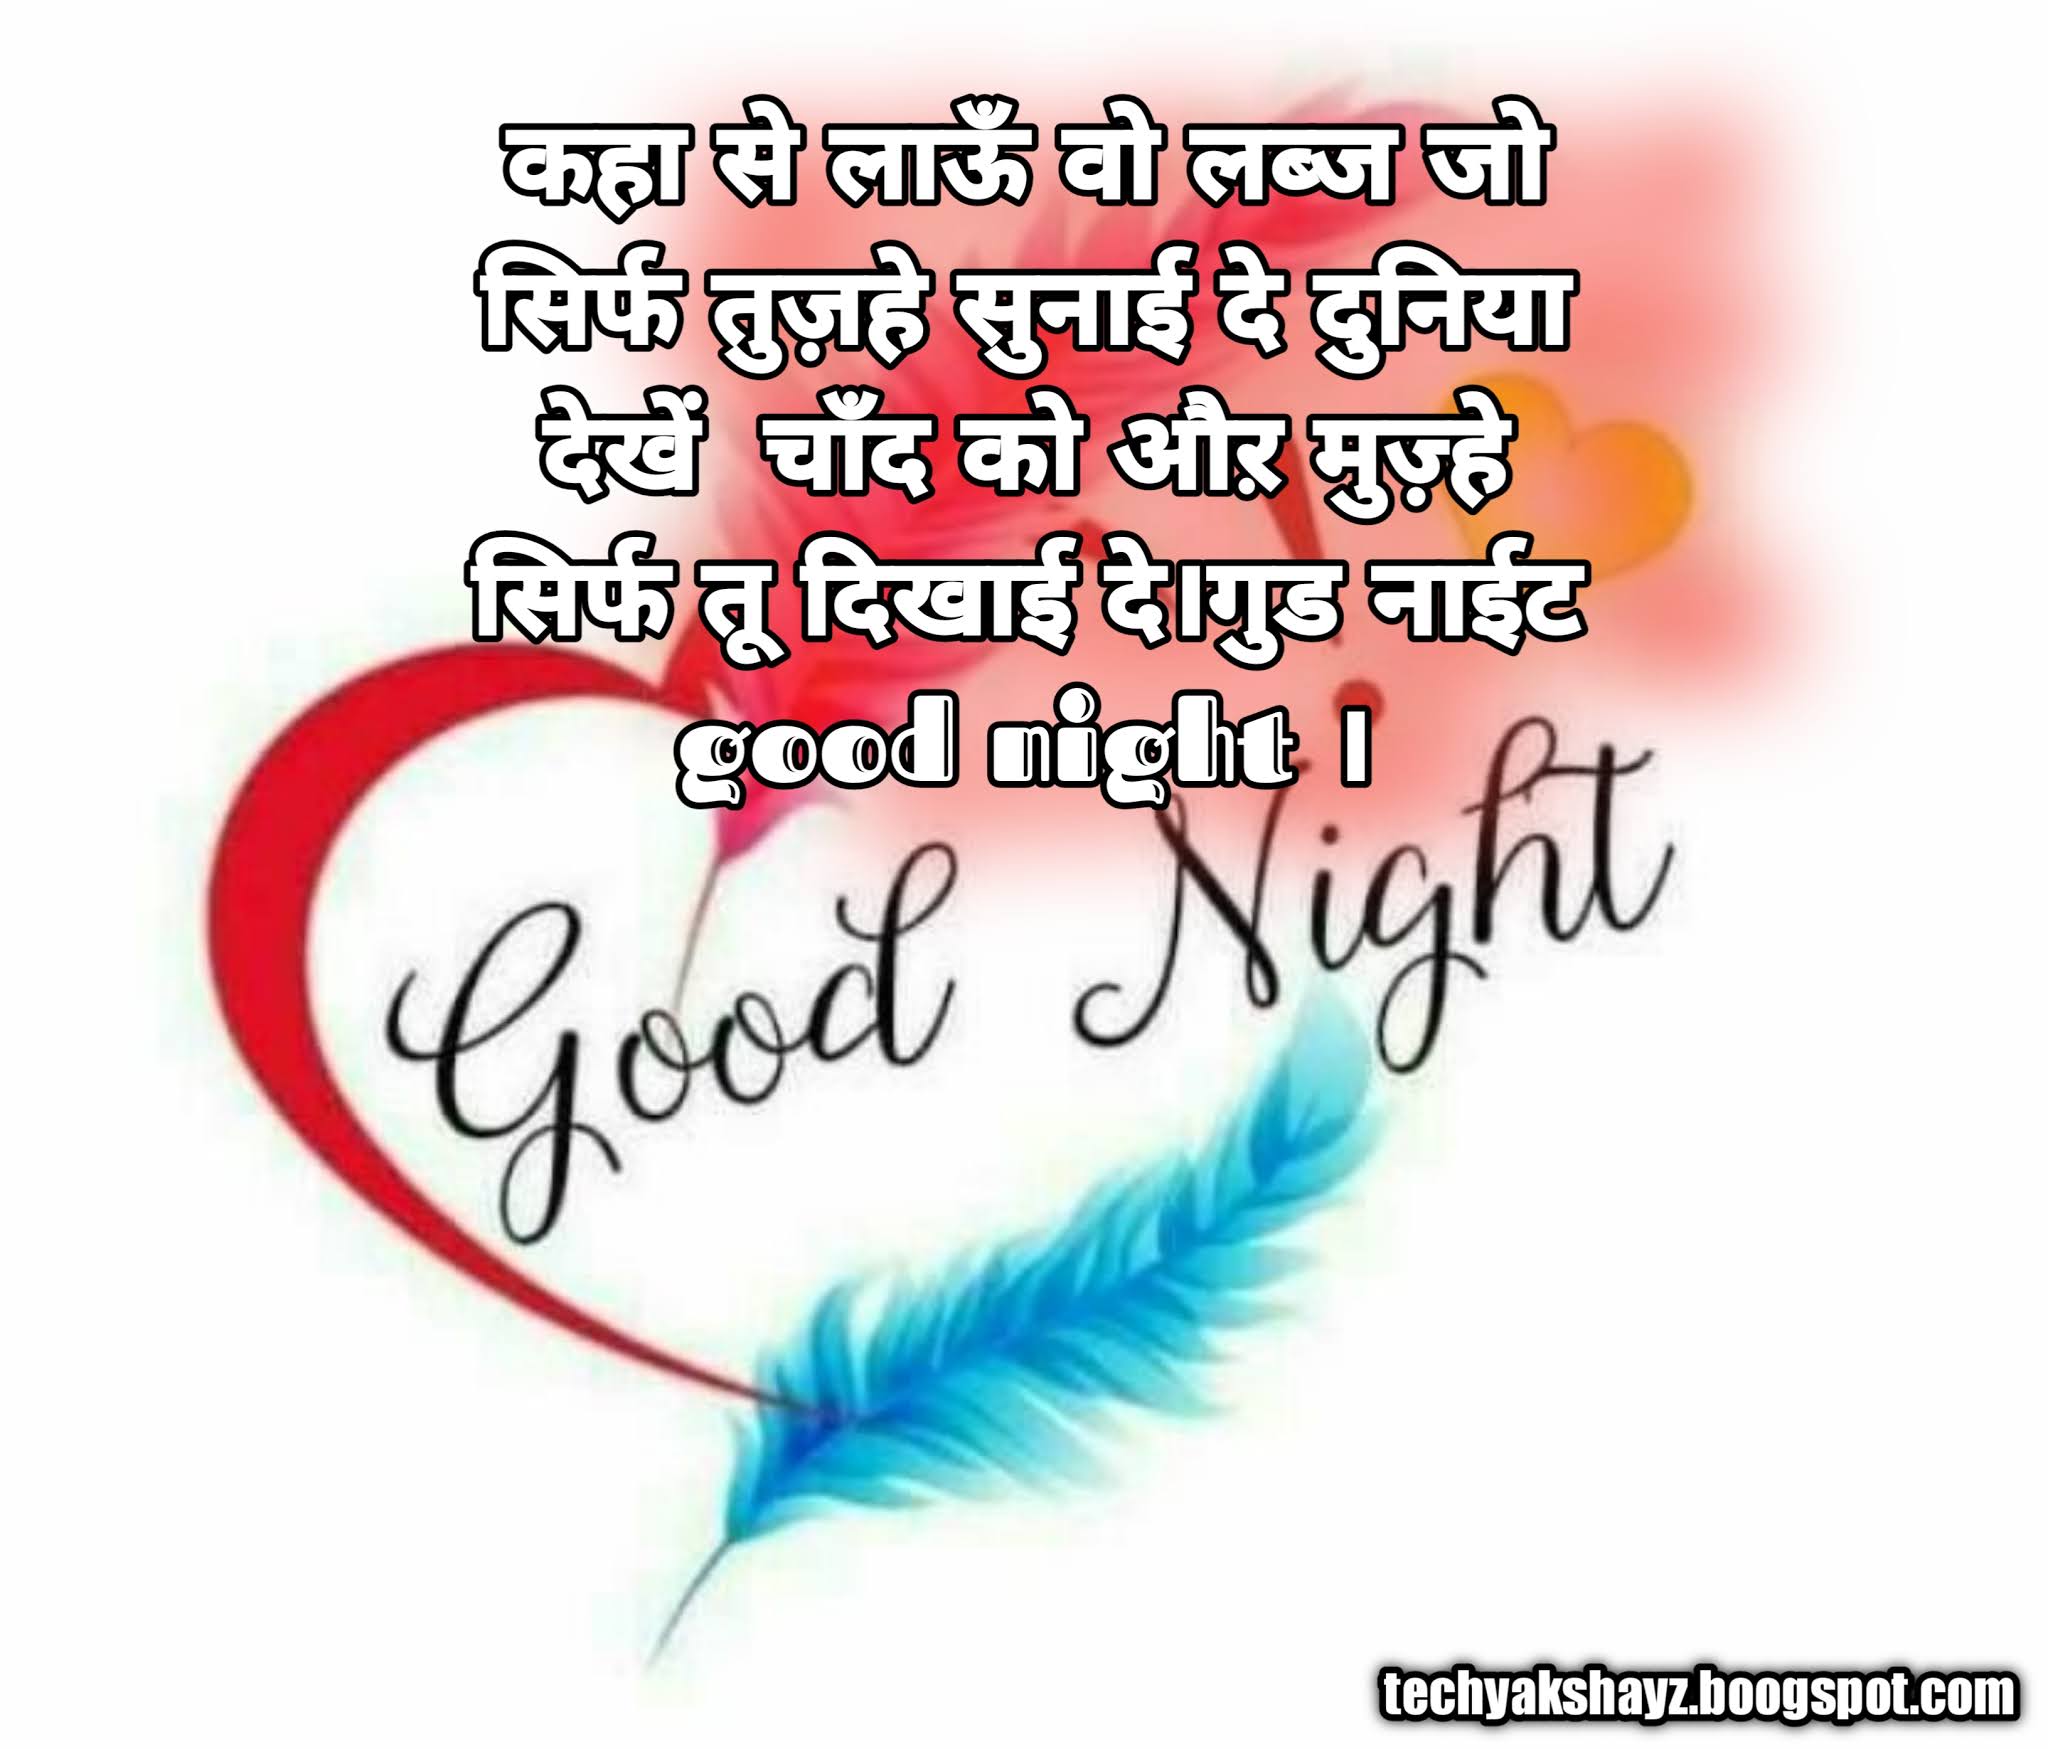 Good Night Quotes In Hindi